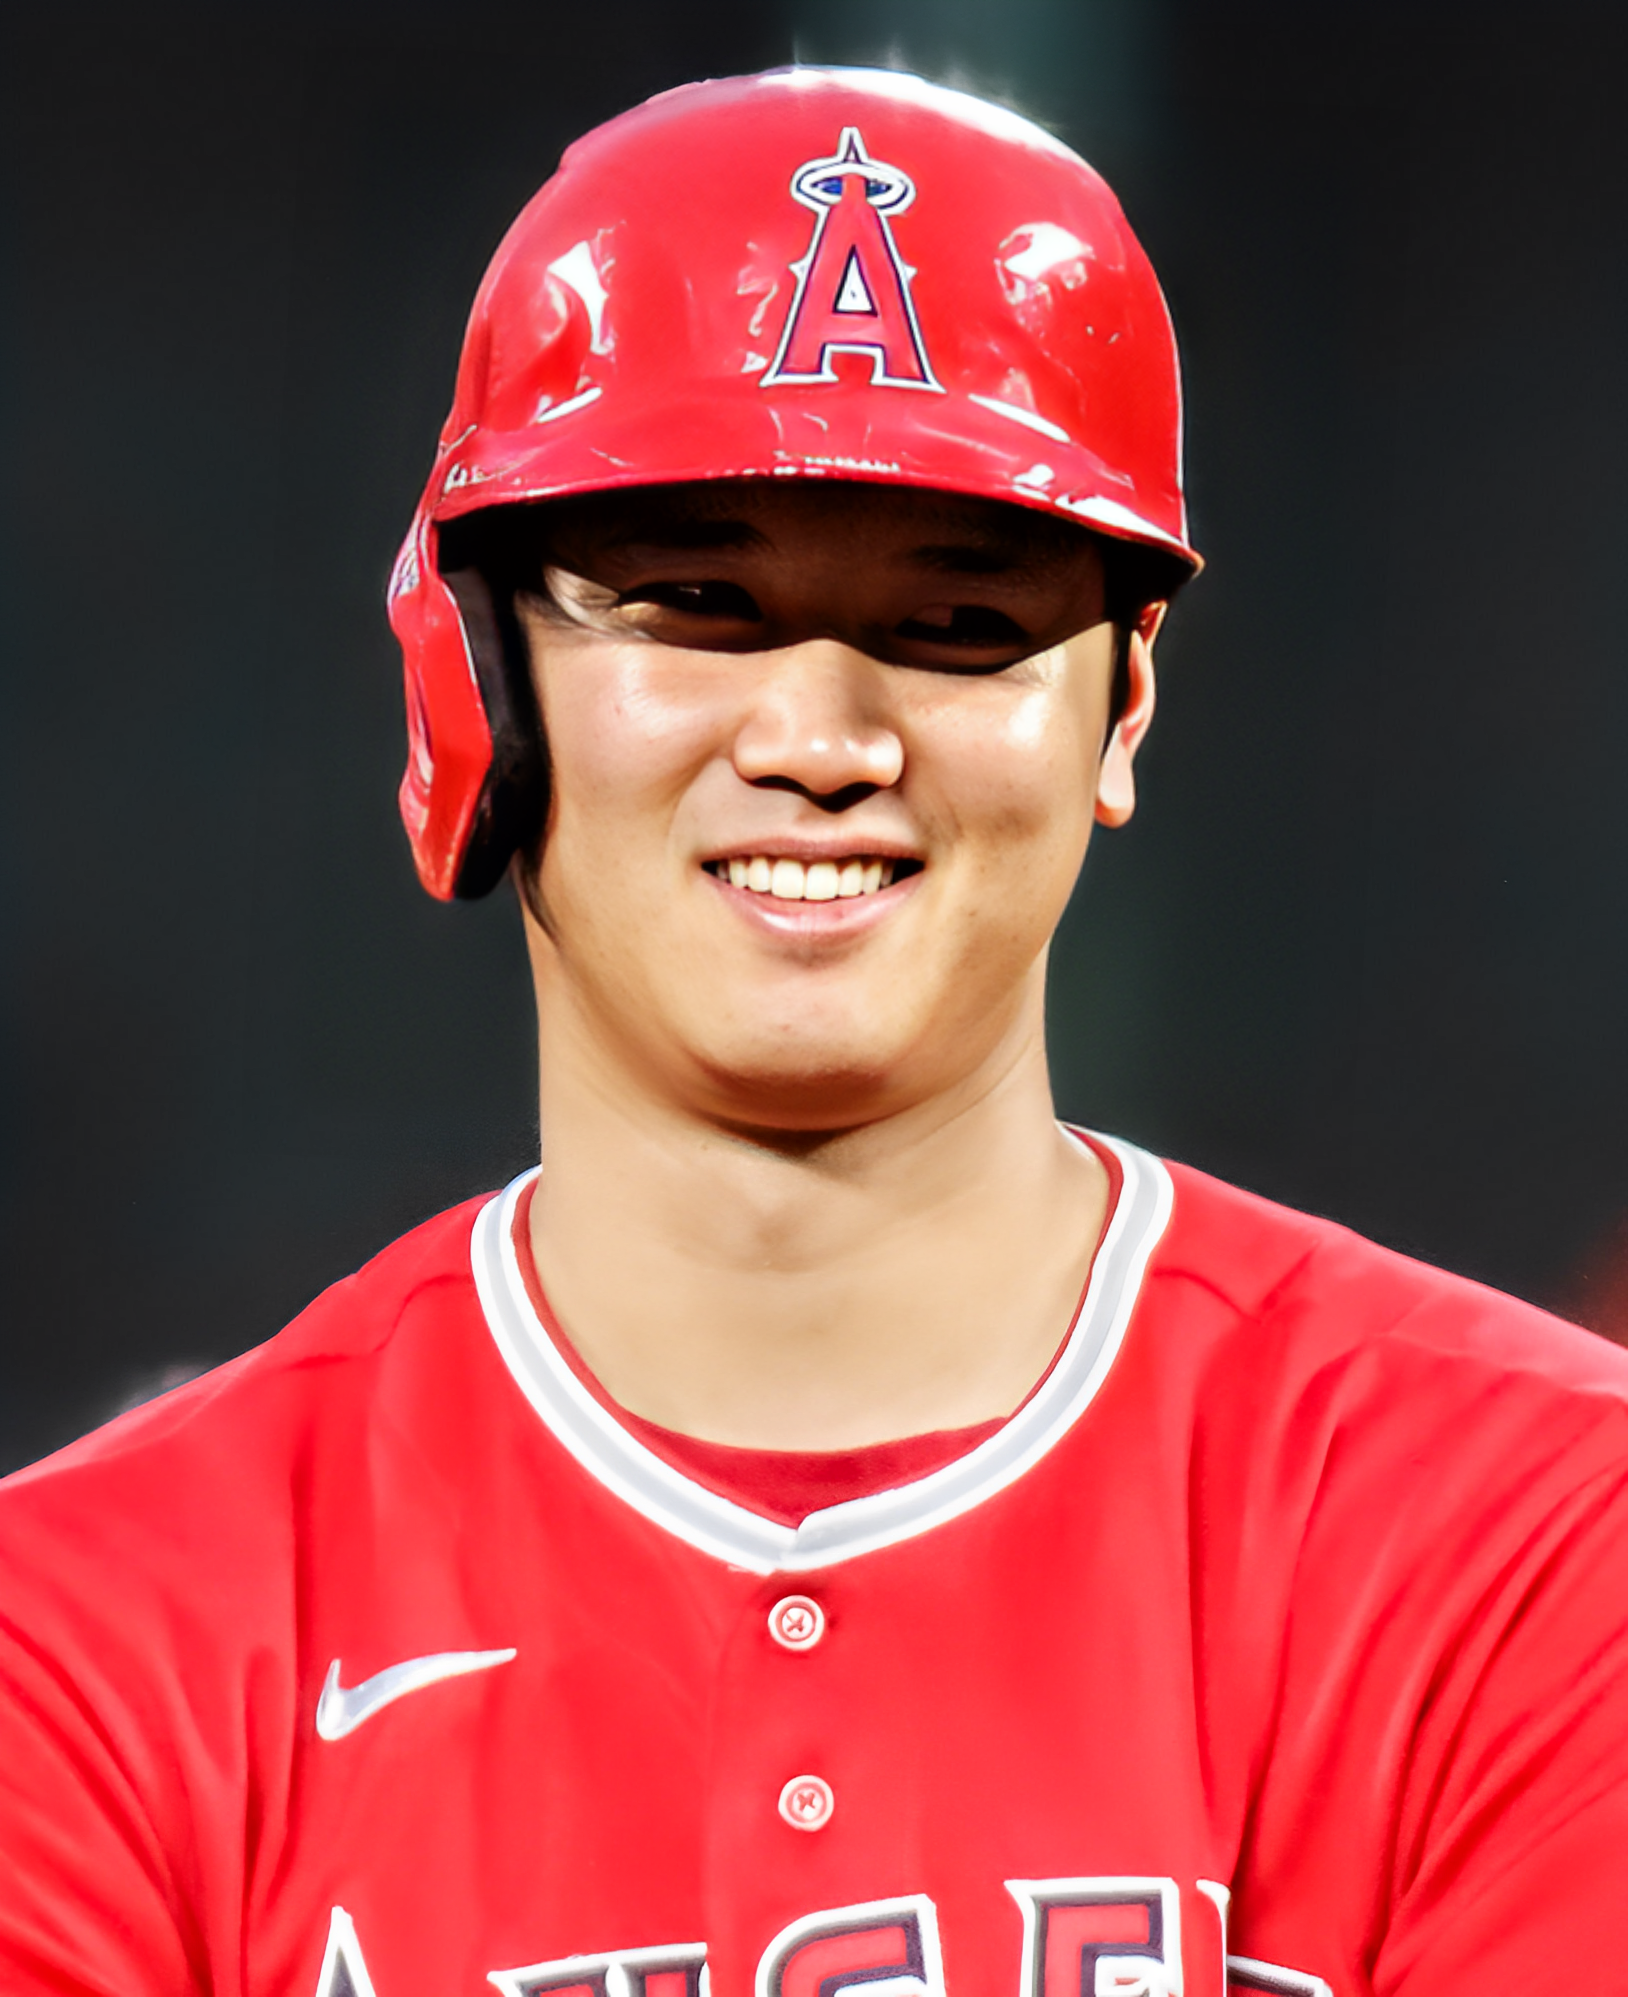 2023 Topps Series 1 Baseball Shohei Ohtani Base Card #17 - Angels